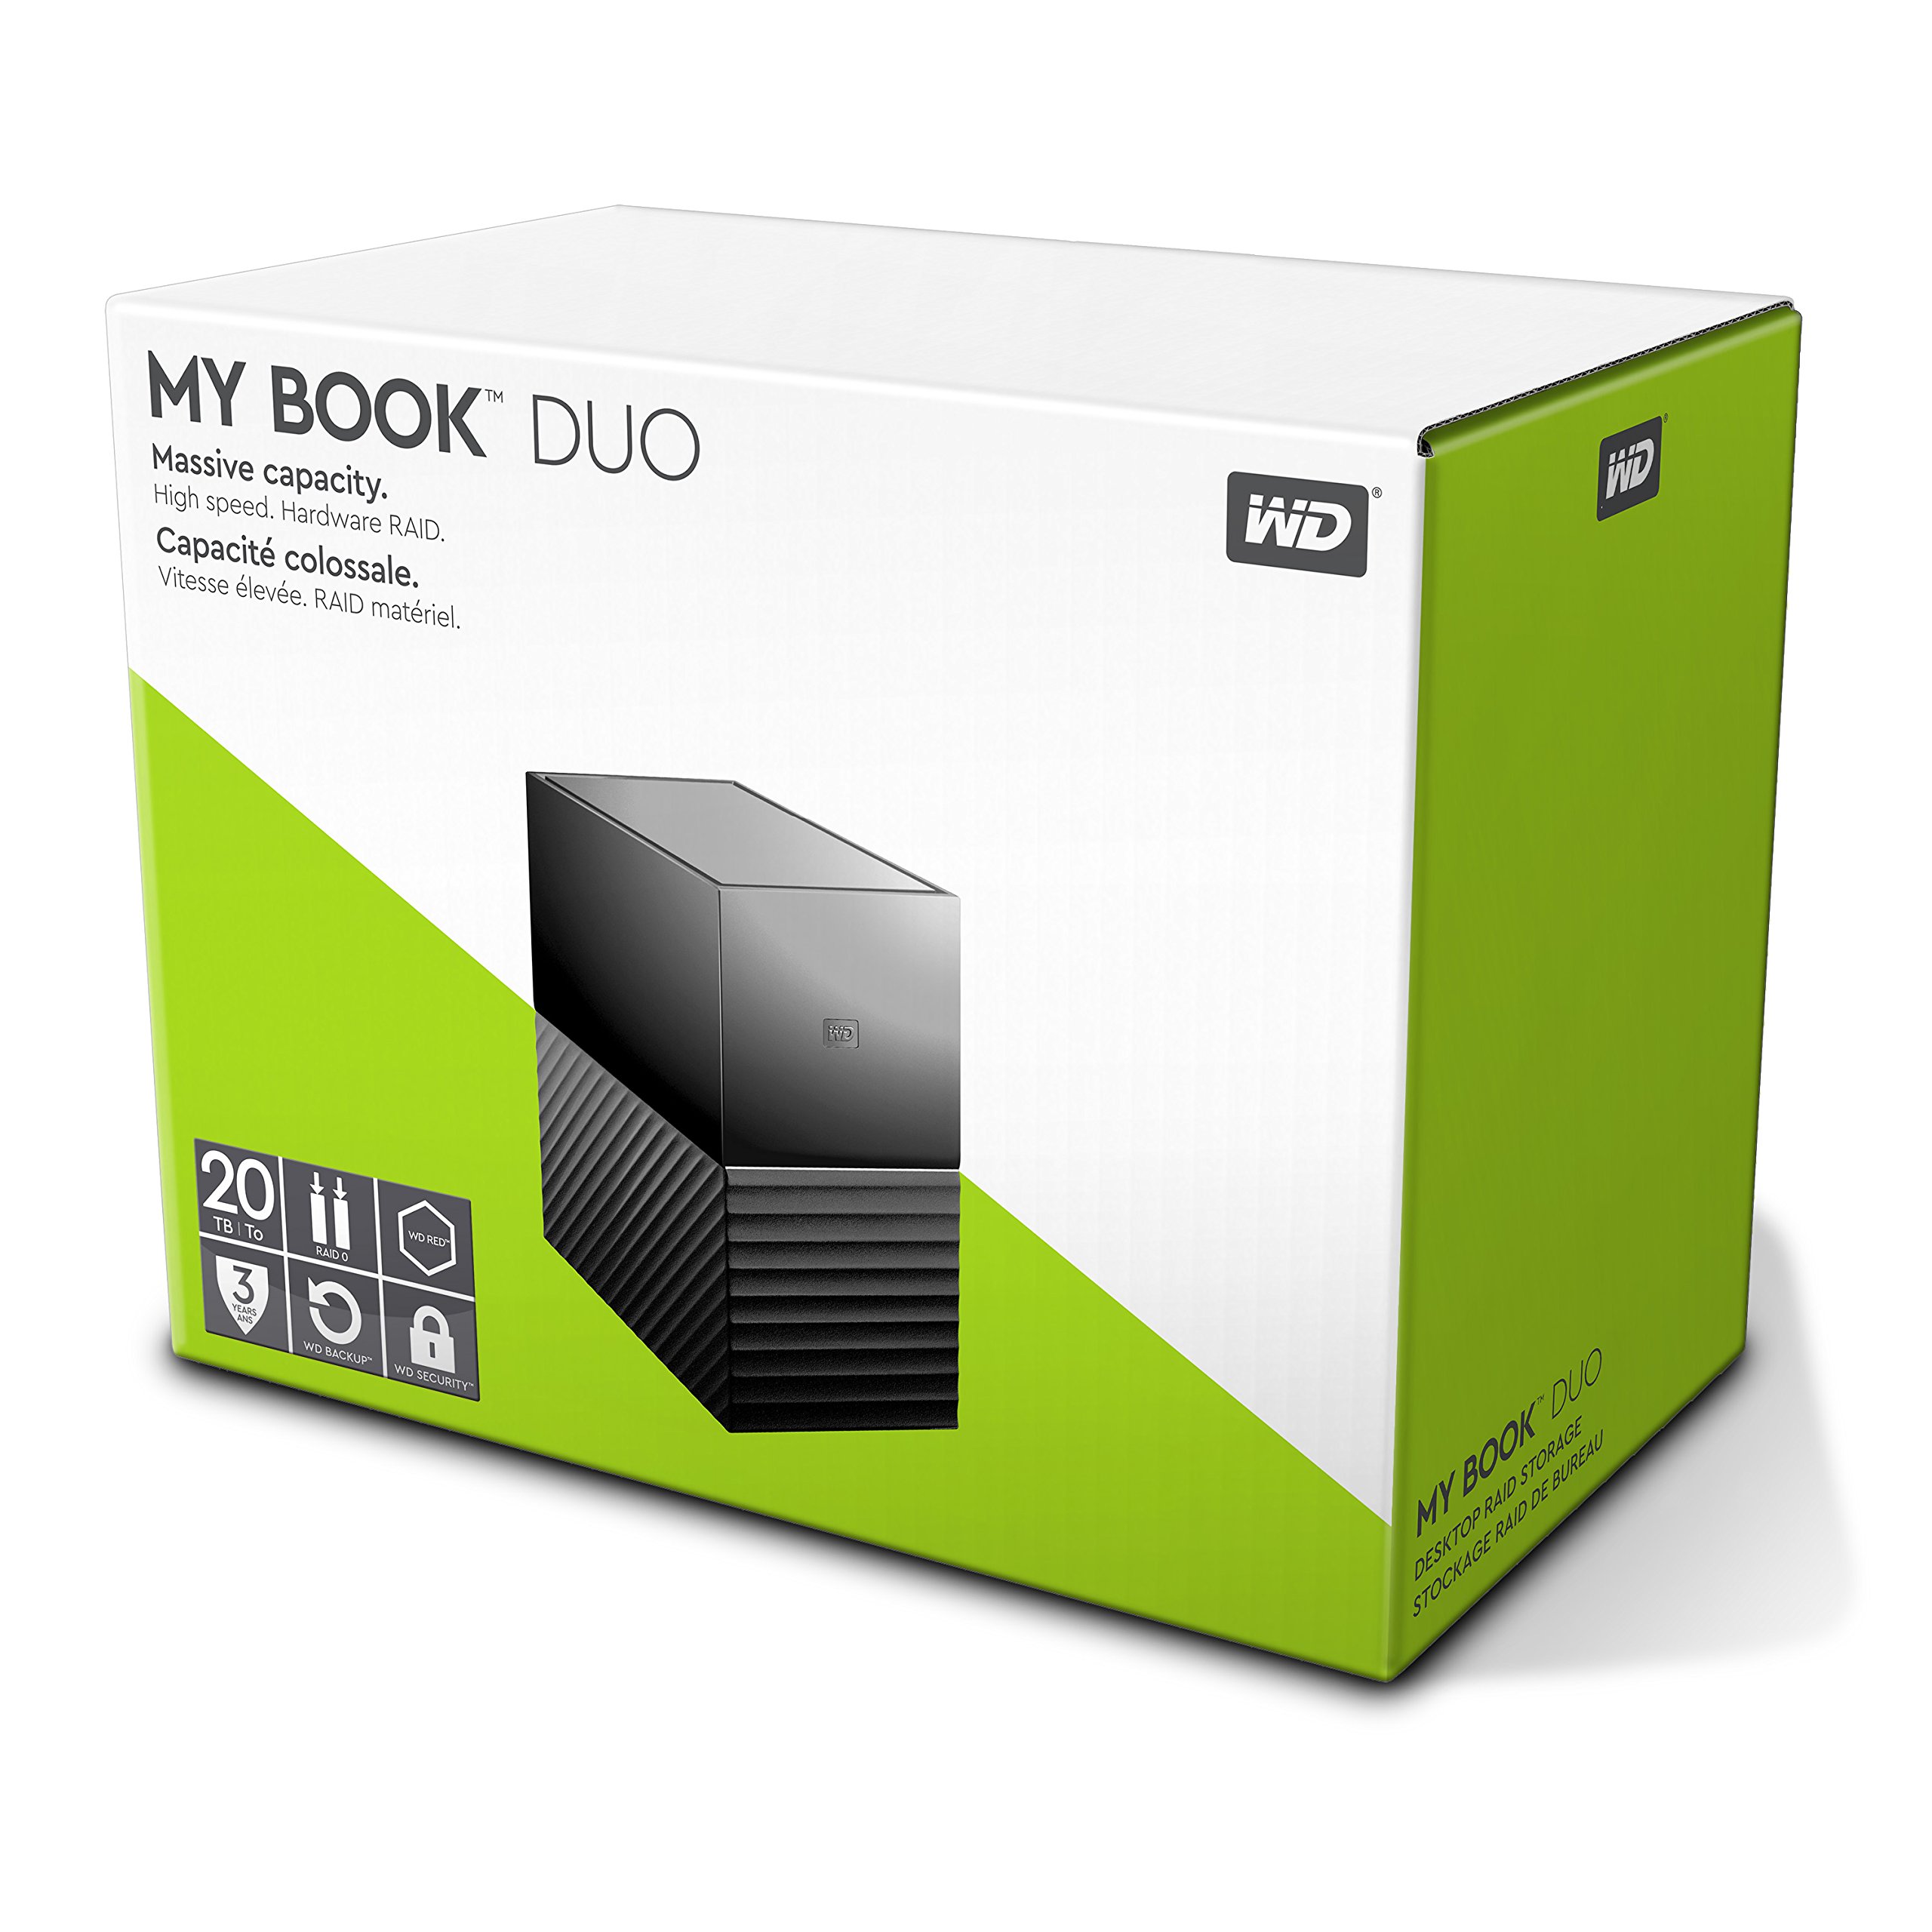 WD 20 TB My Book Duo Desktop RAID USB 3.1 External Hard Drive and Auto Backup Software